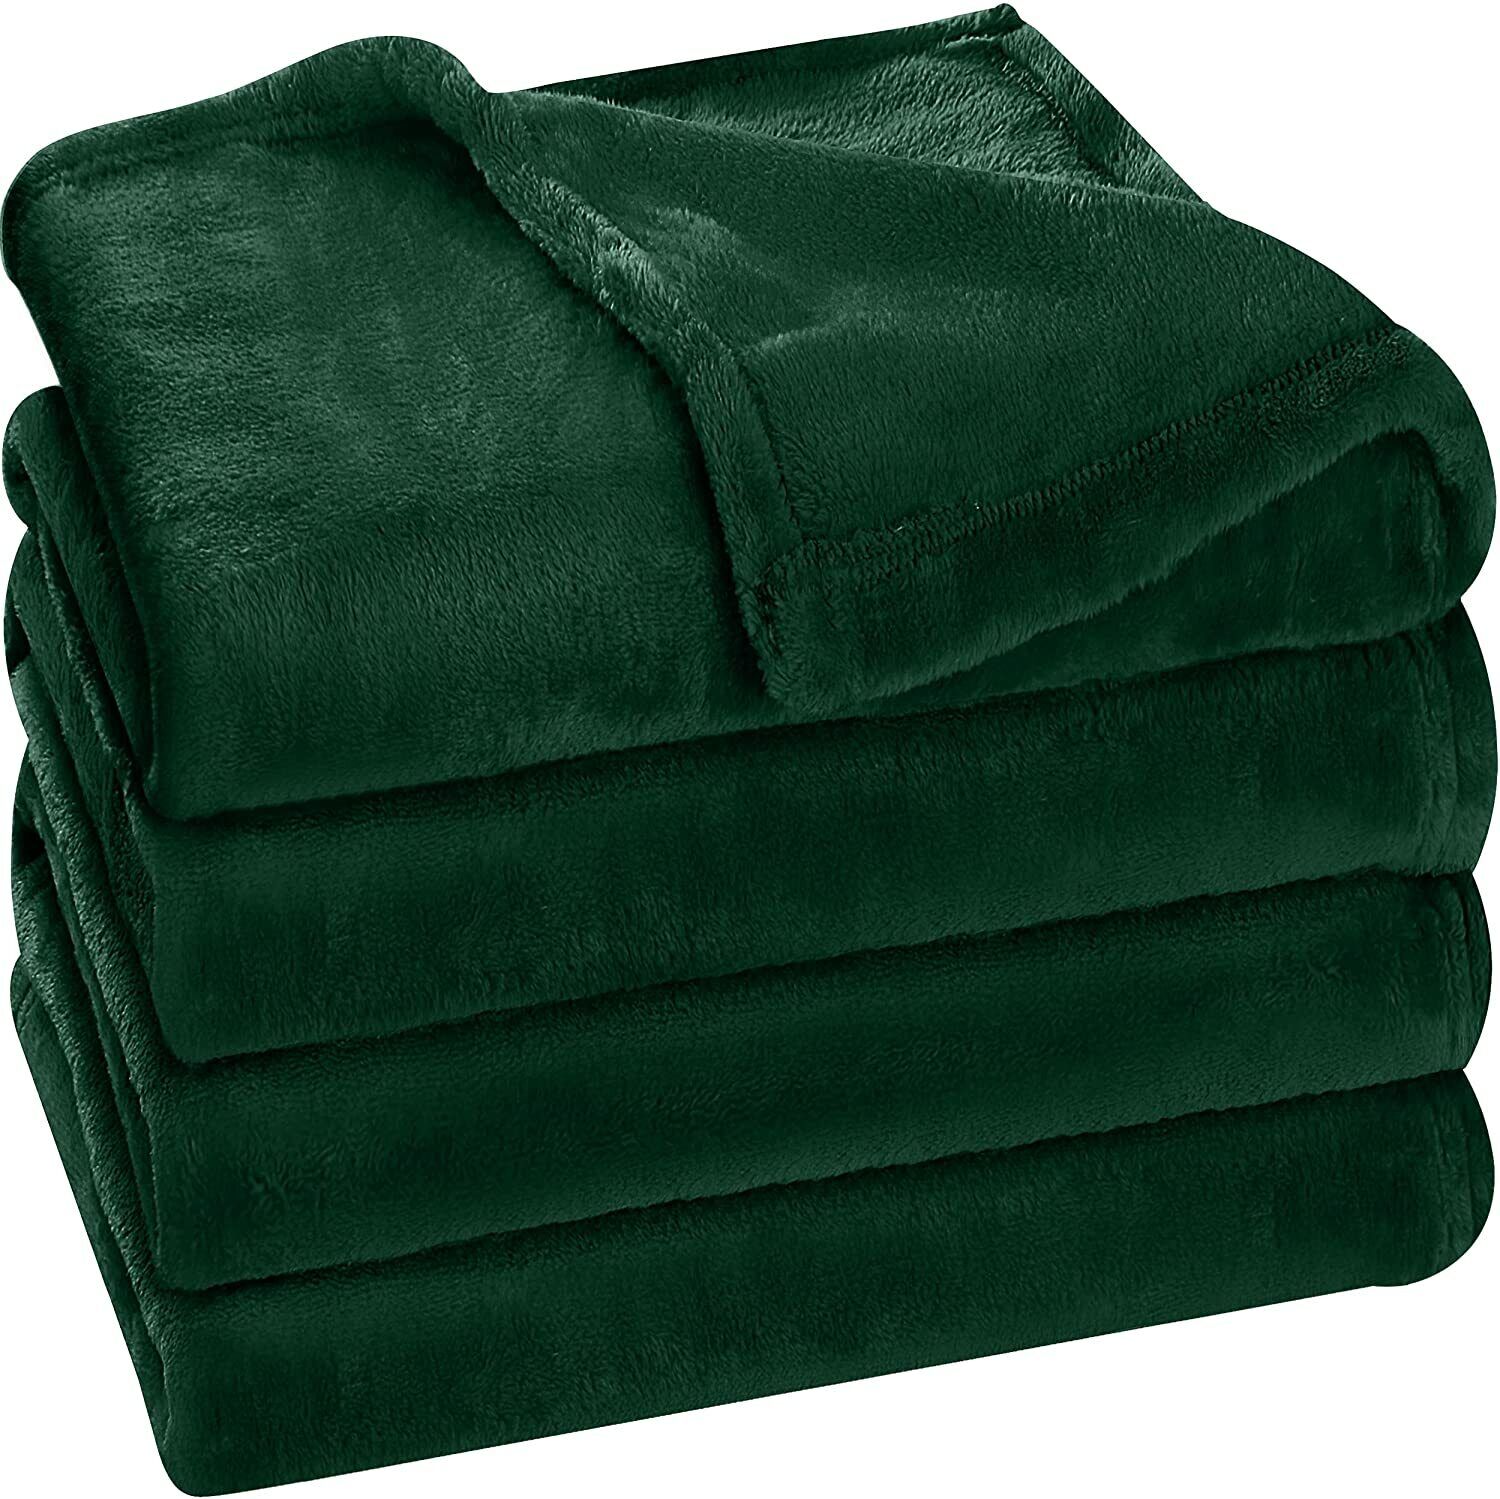 300gsm Luxury Bed Blanket Anti-static Fuzzy Soft